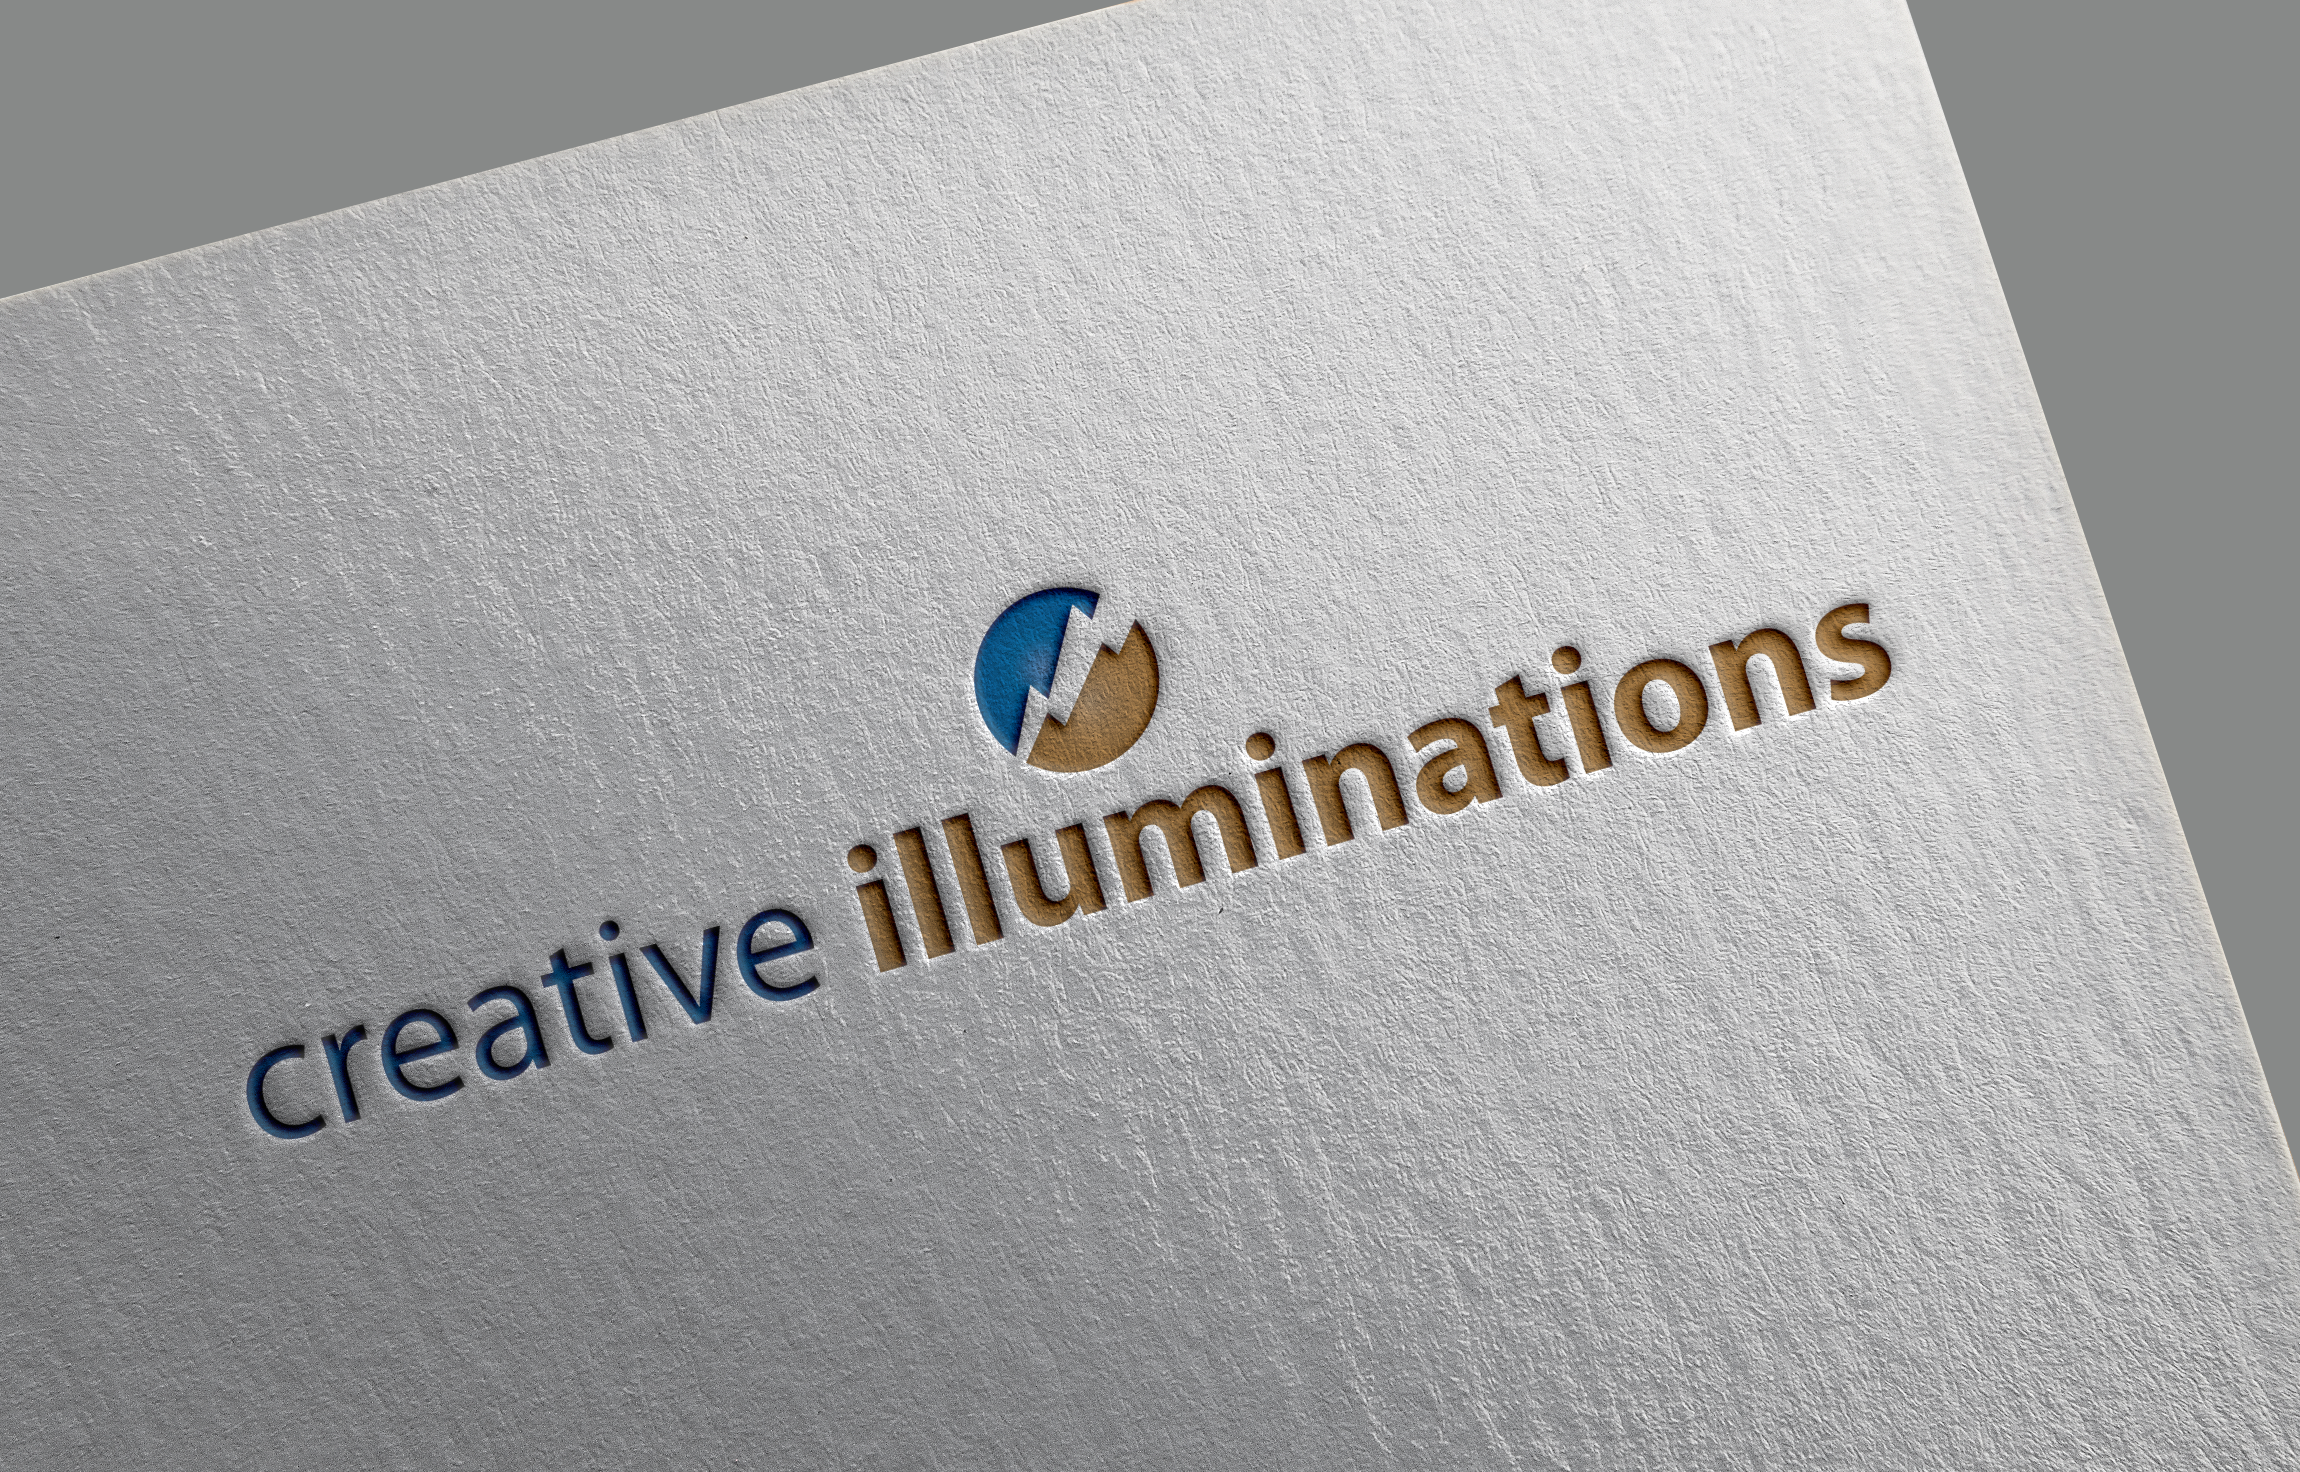 creative illuminations inc